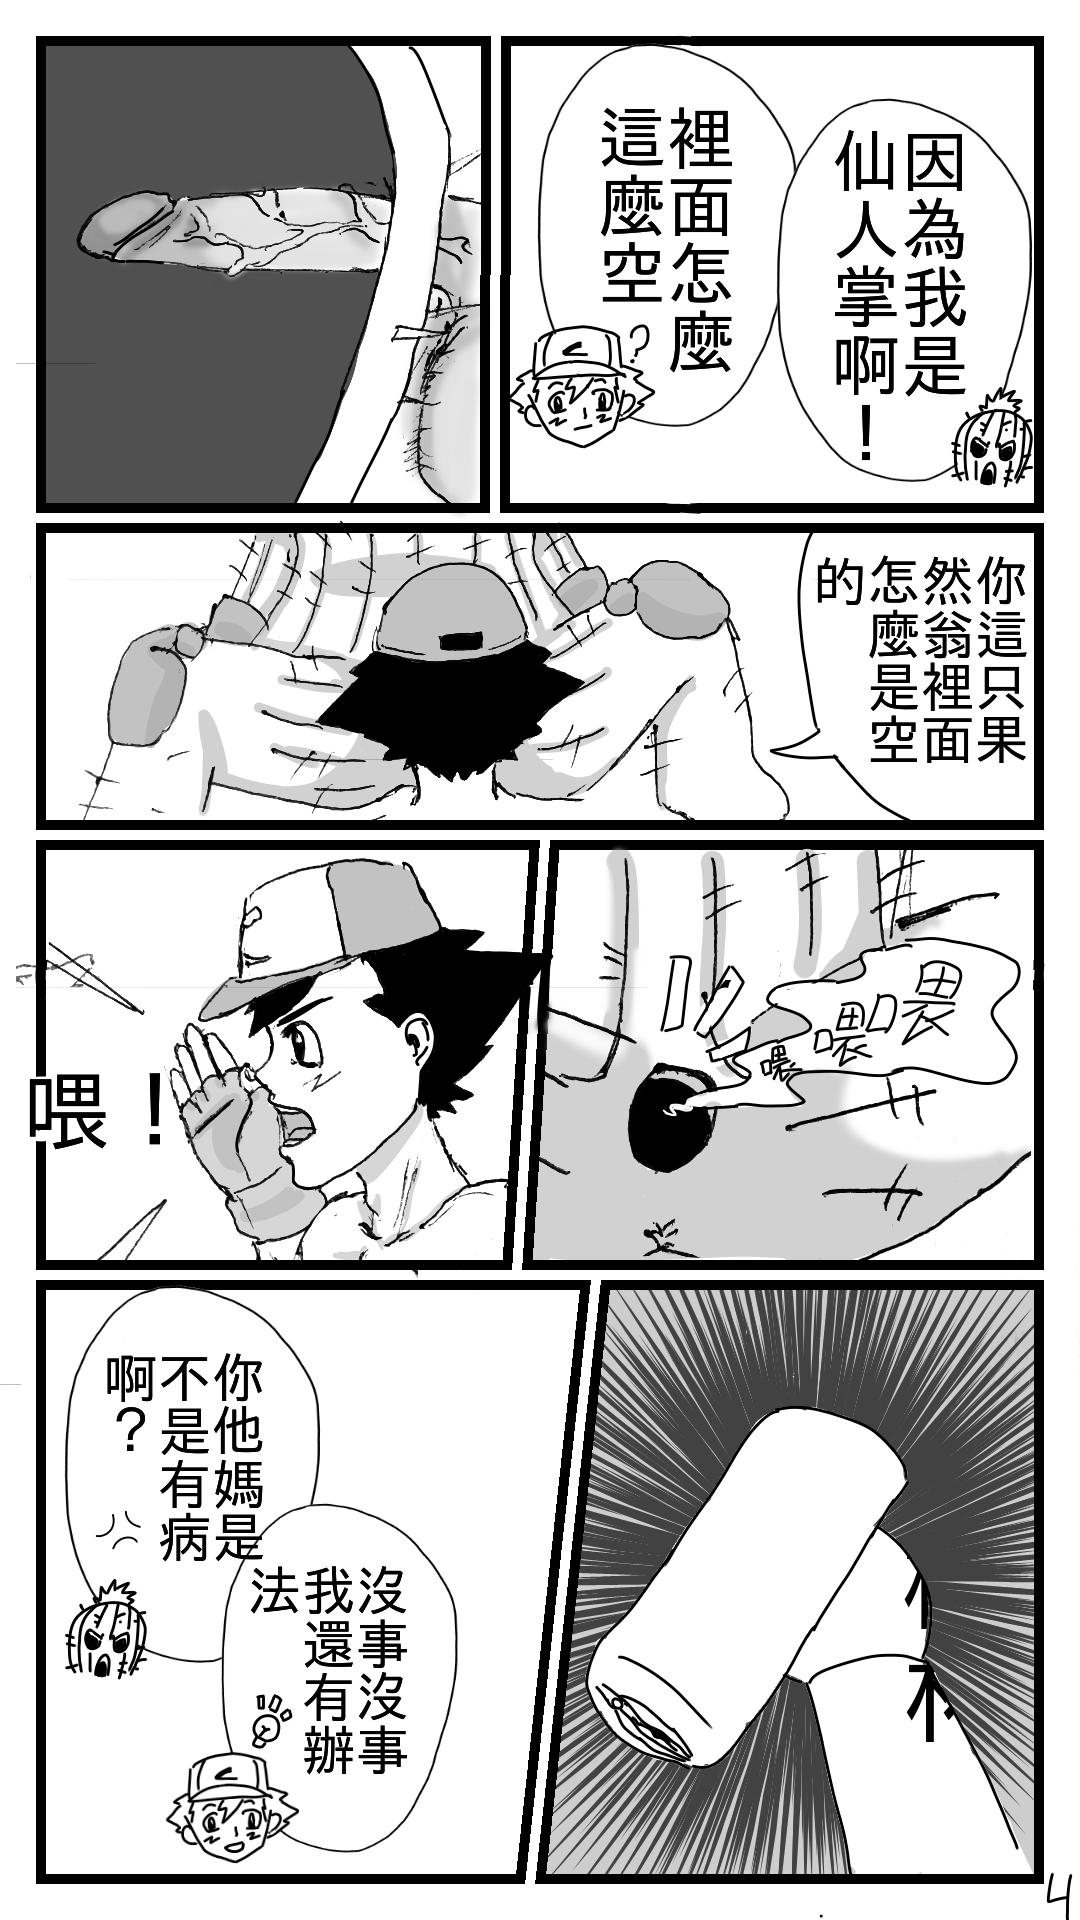 Belly 小智大战仙人掌兽 - Digimon Pokemon | pocket monsters Strip - Page 4